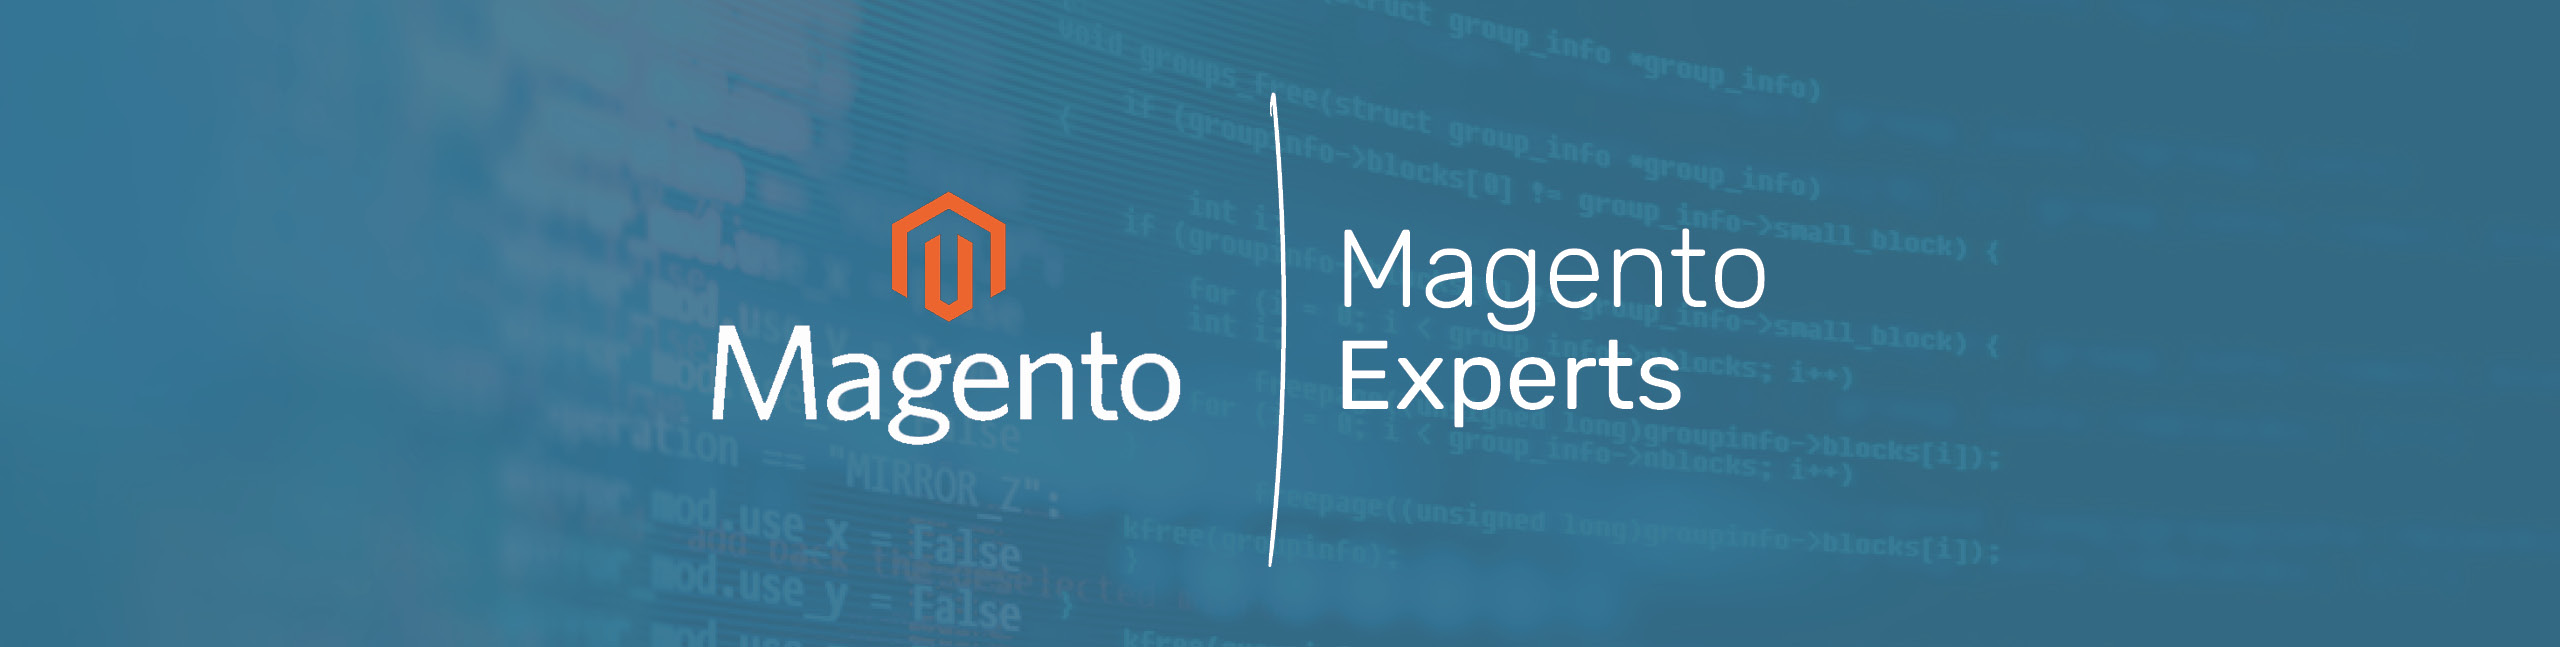 Magento logo on blue background web design by Sellerdeck 